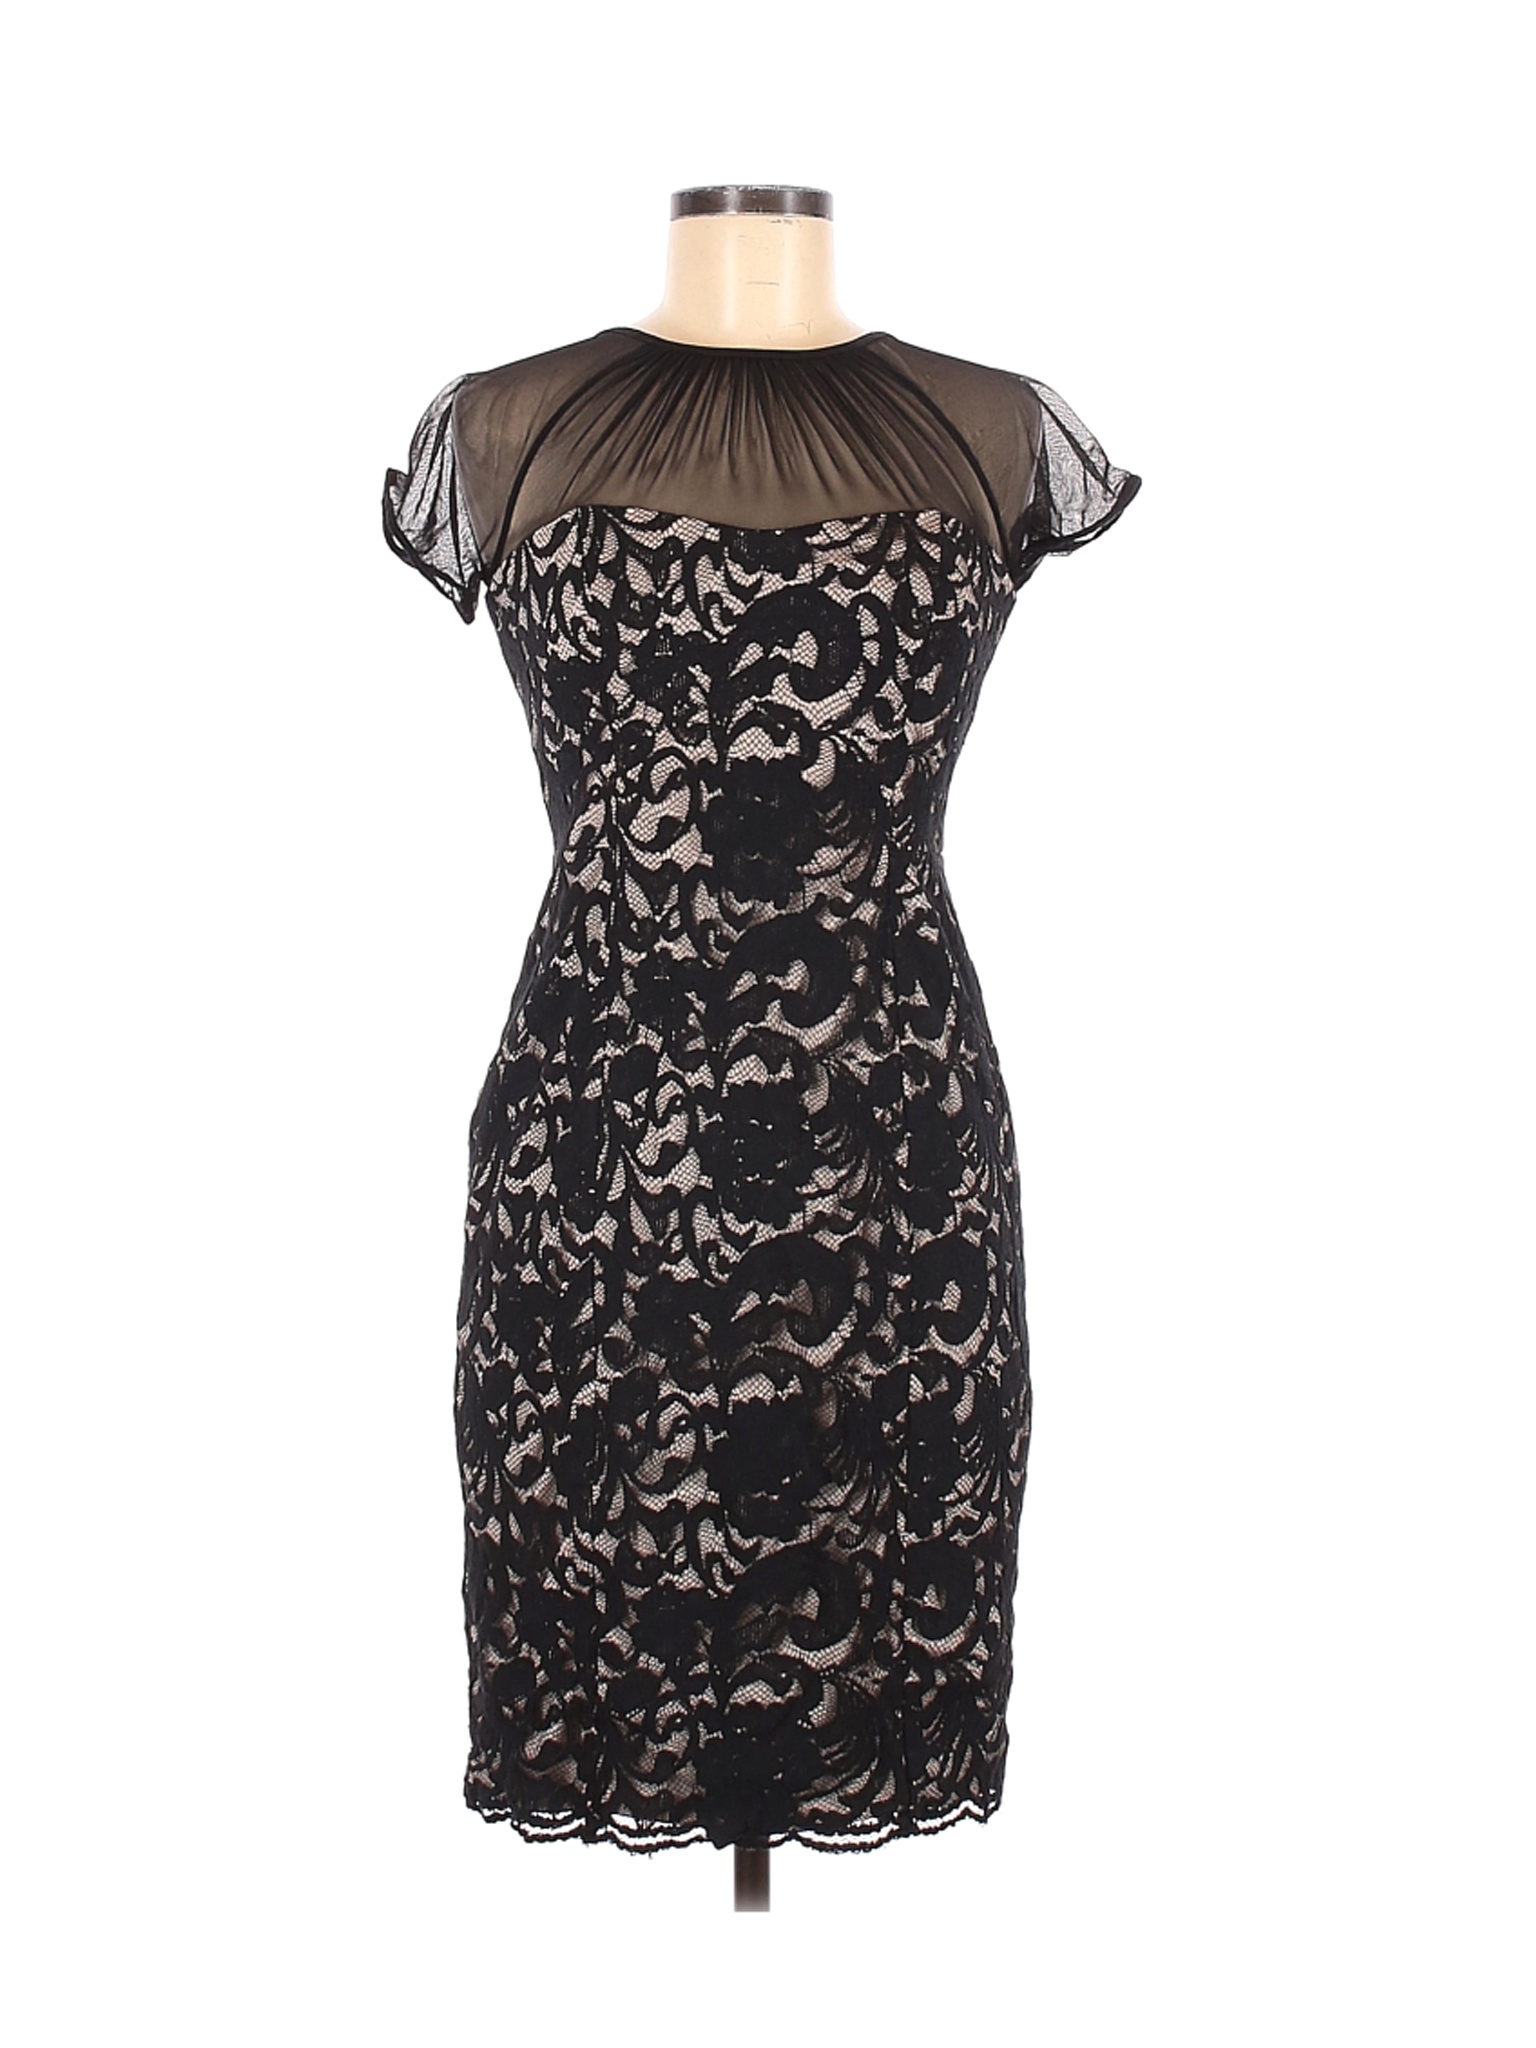 Maggy London Women Black Cocktail Dress 6 Petites | eBay